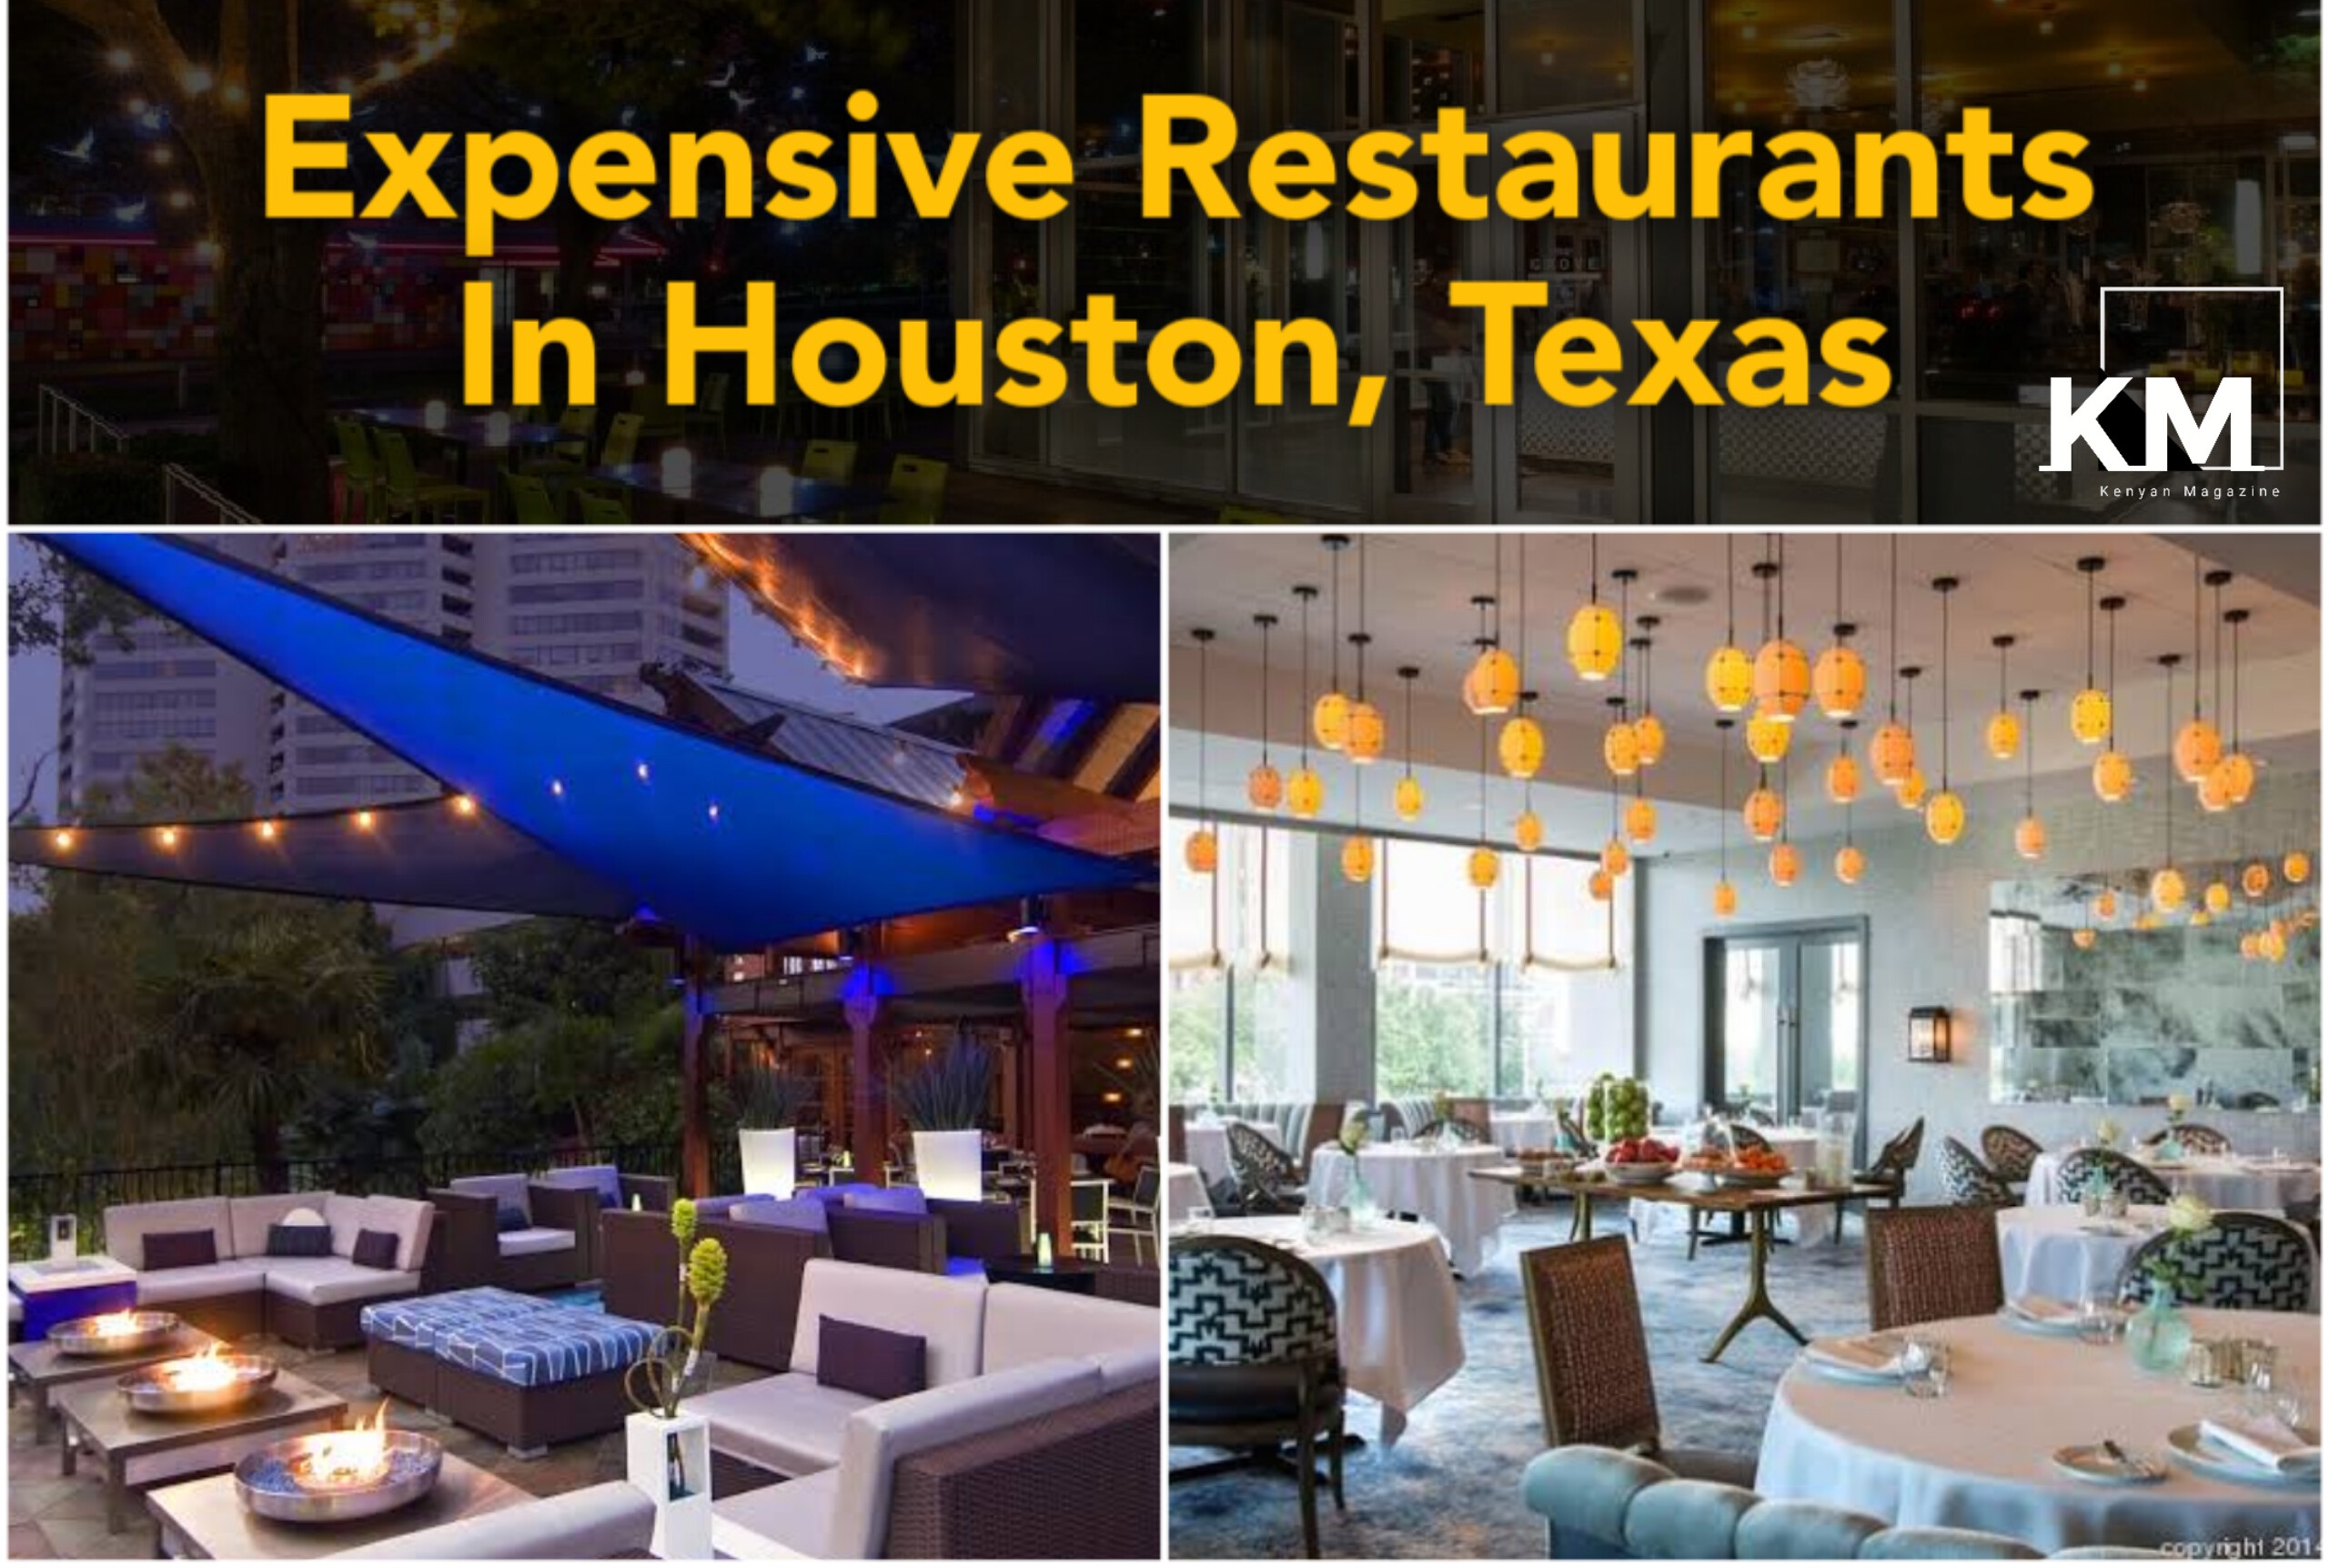 Best expensive restaurants in Houston Texas